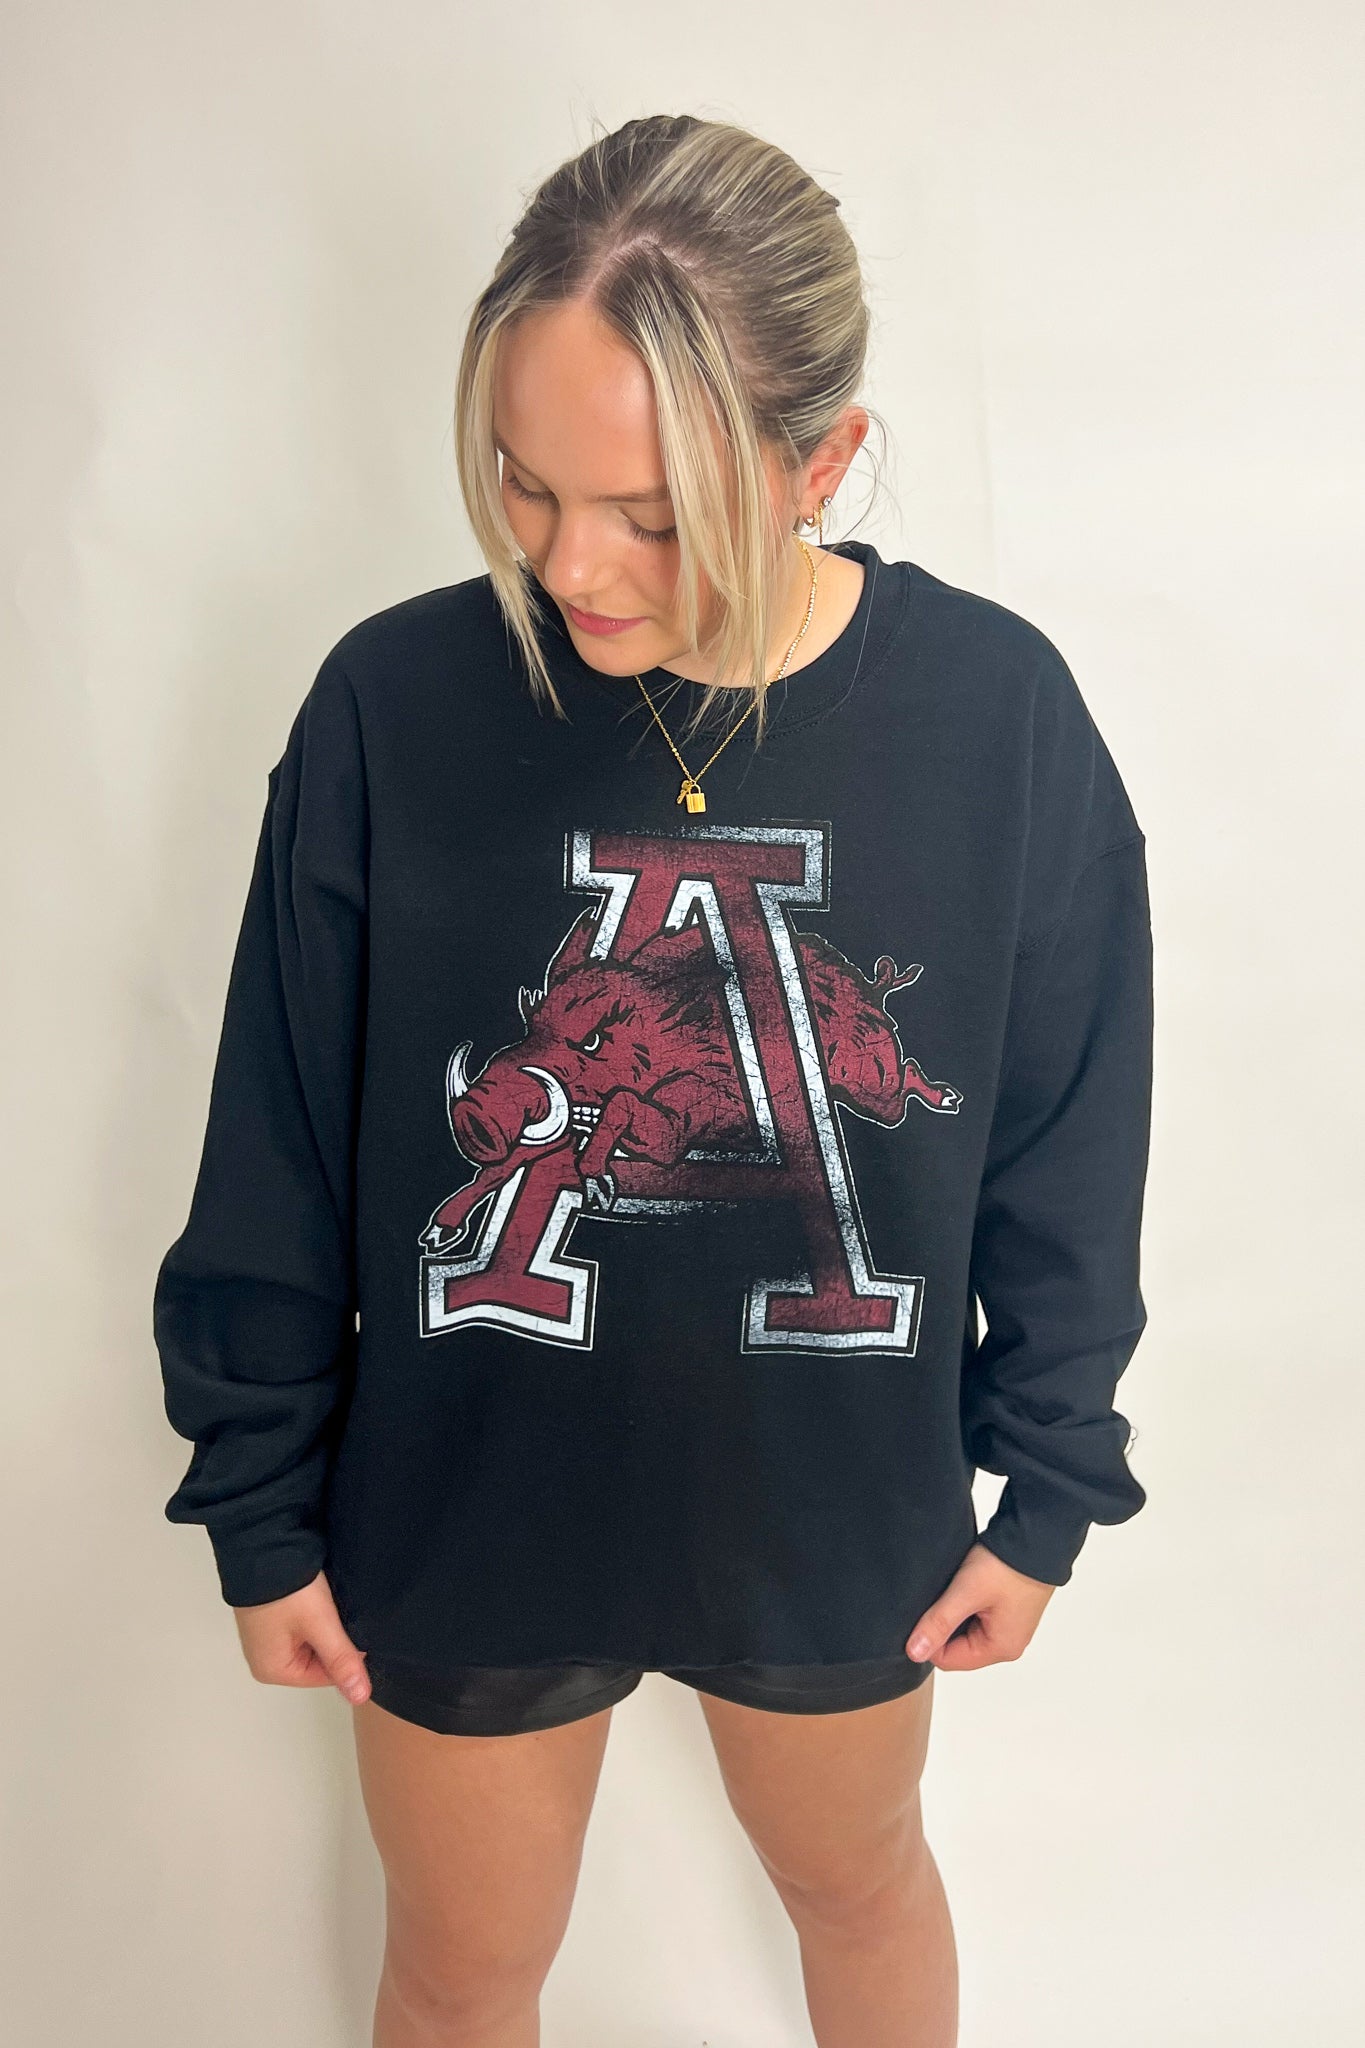 Through the "A" Sweatshirt